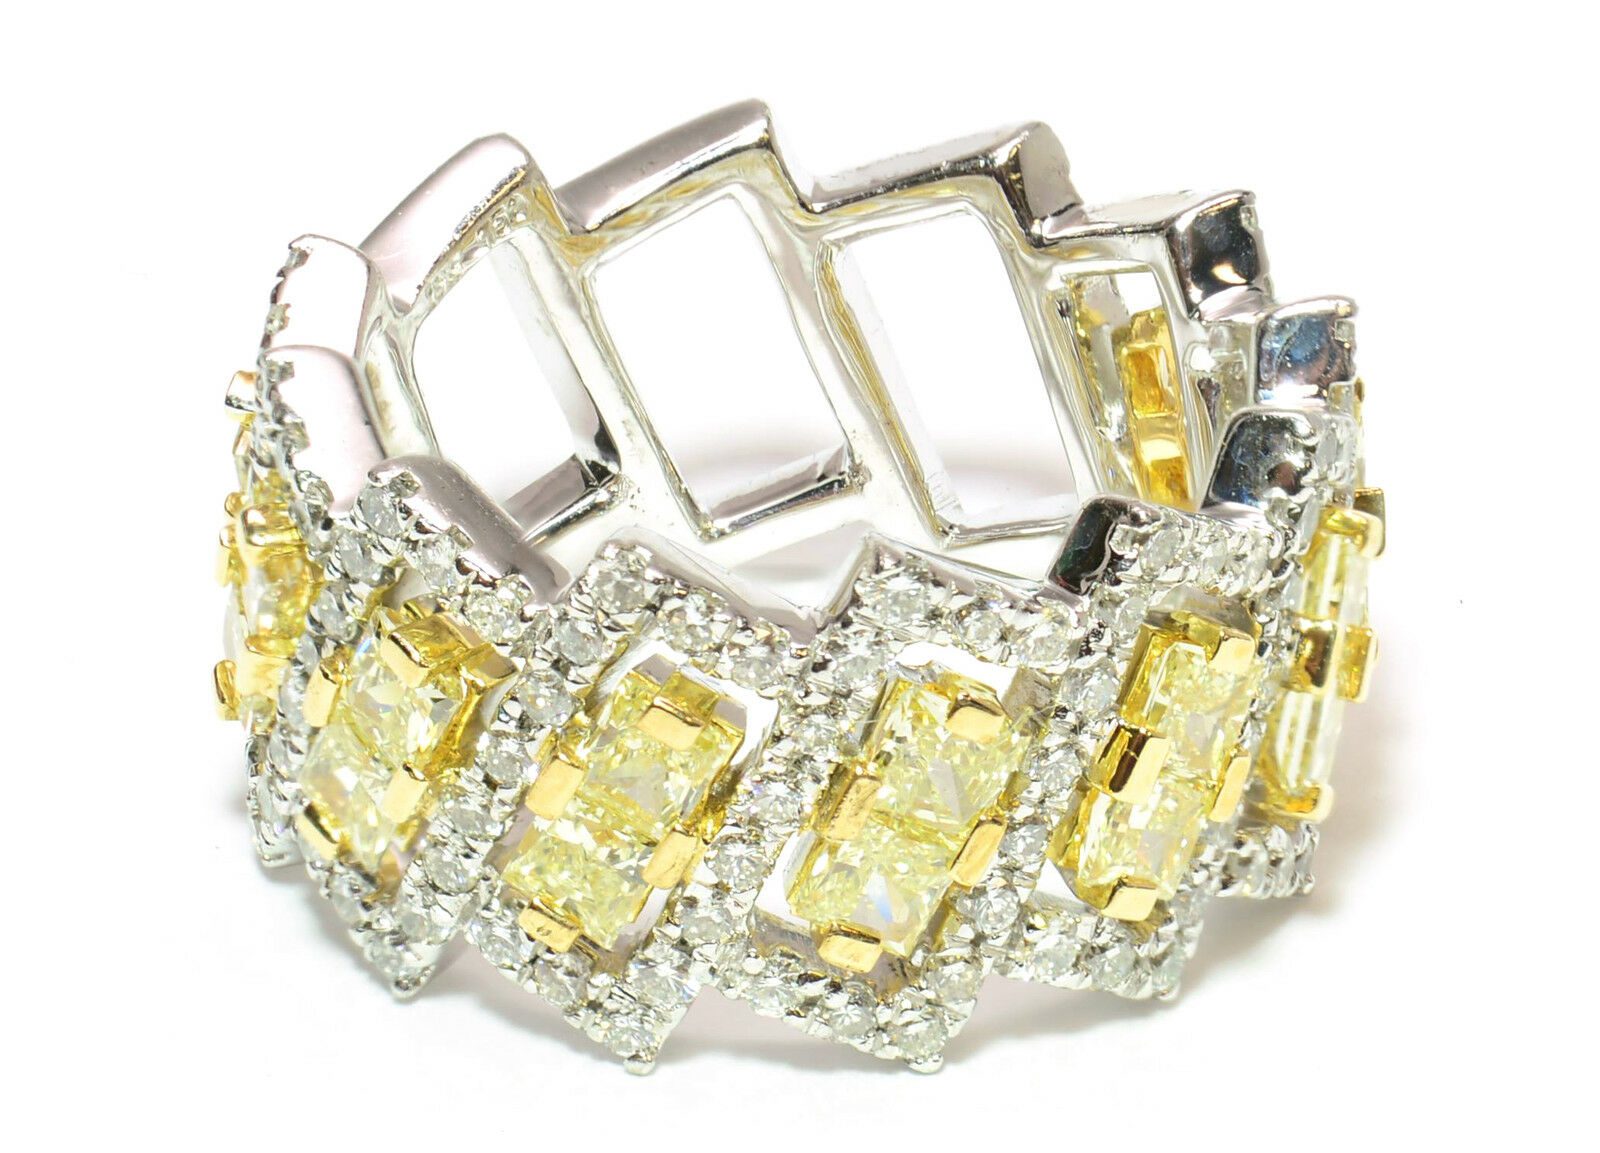 Princess-Canary-Yellow-Diamond-Rectangular-Ring-18k-White-Gold-29-ct-VS-SZ-675-131707237062